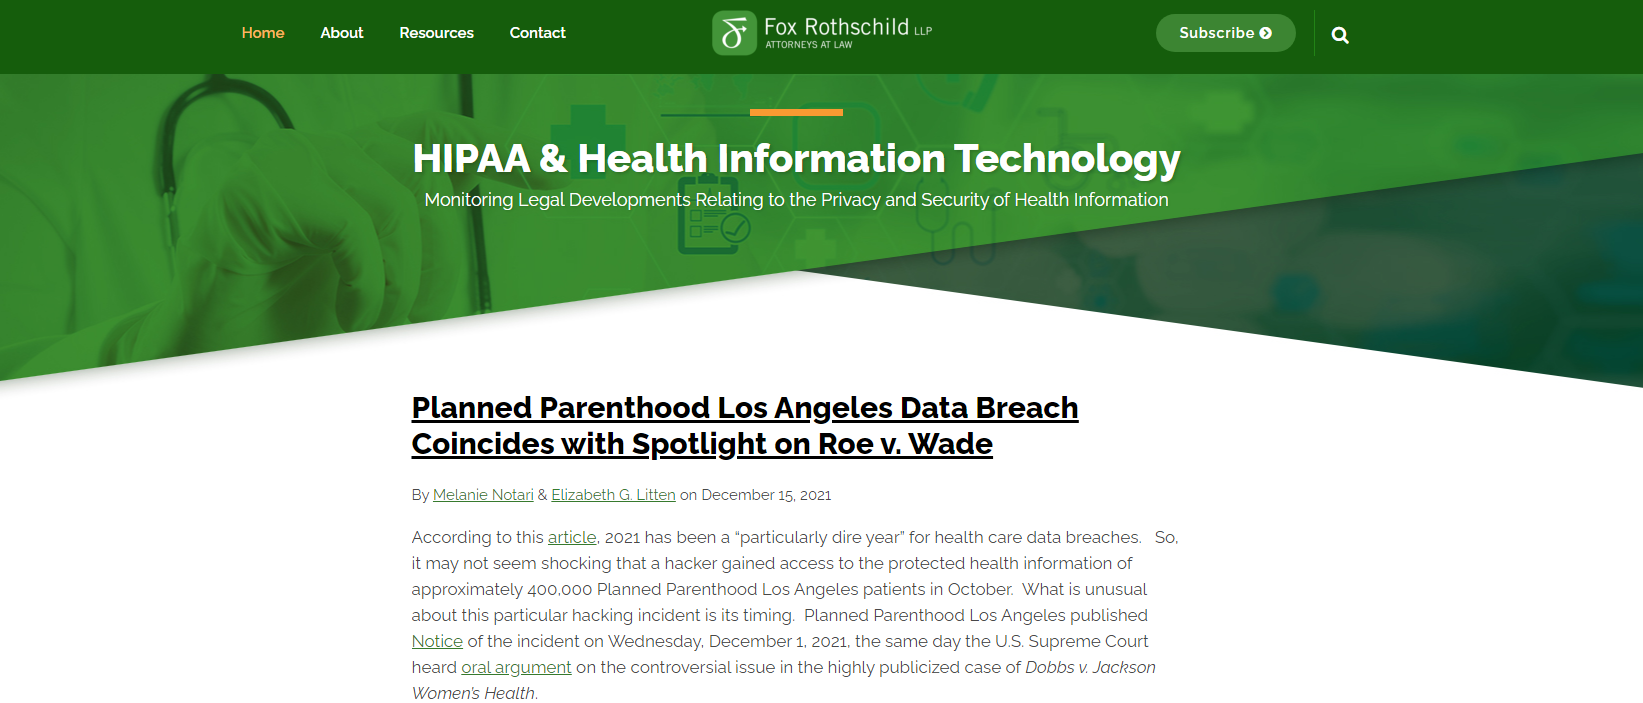 HIPAA & Health Information Technology